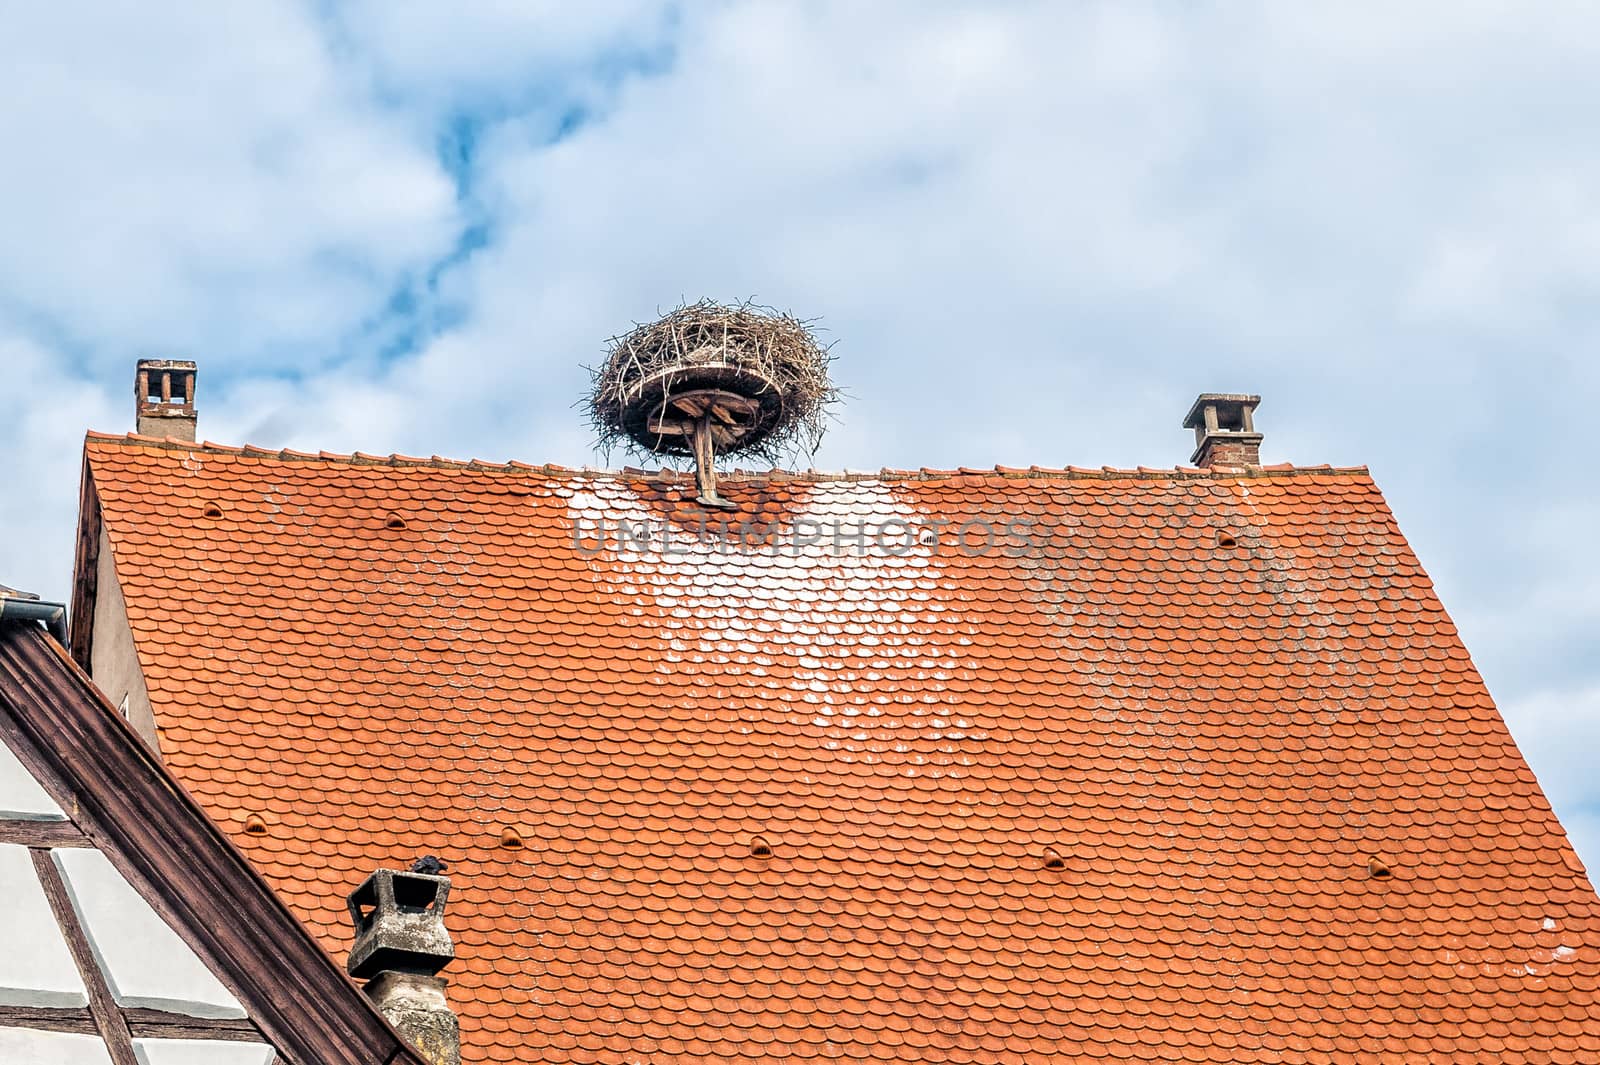 Roof with Storks Nest taken in Colmar, France